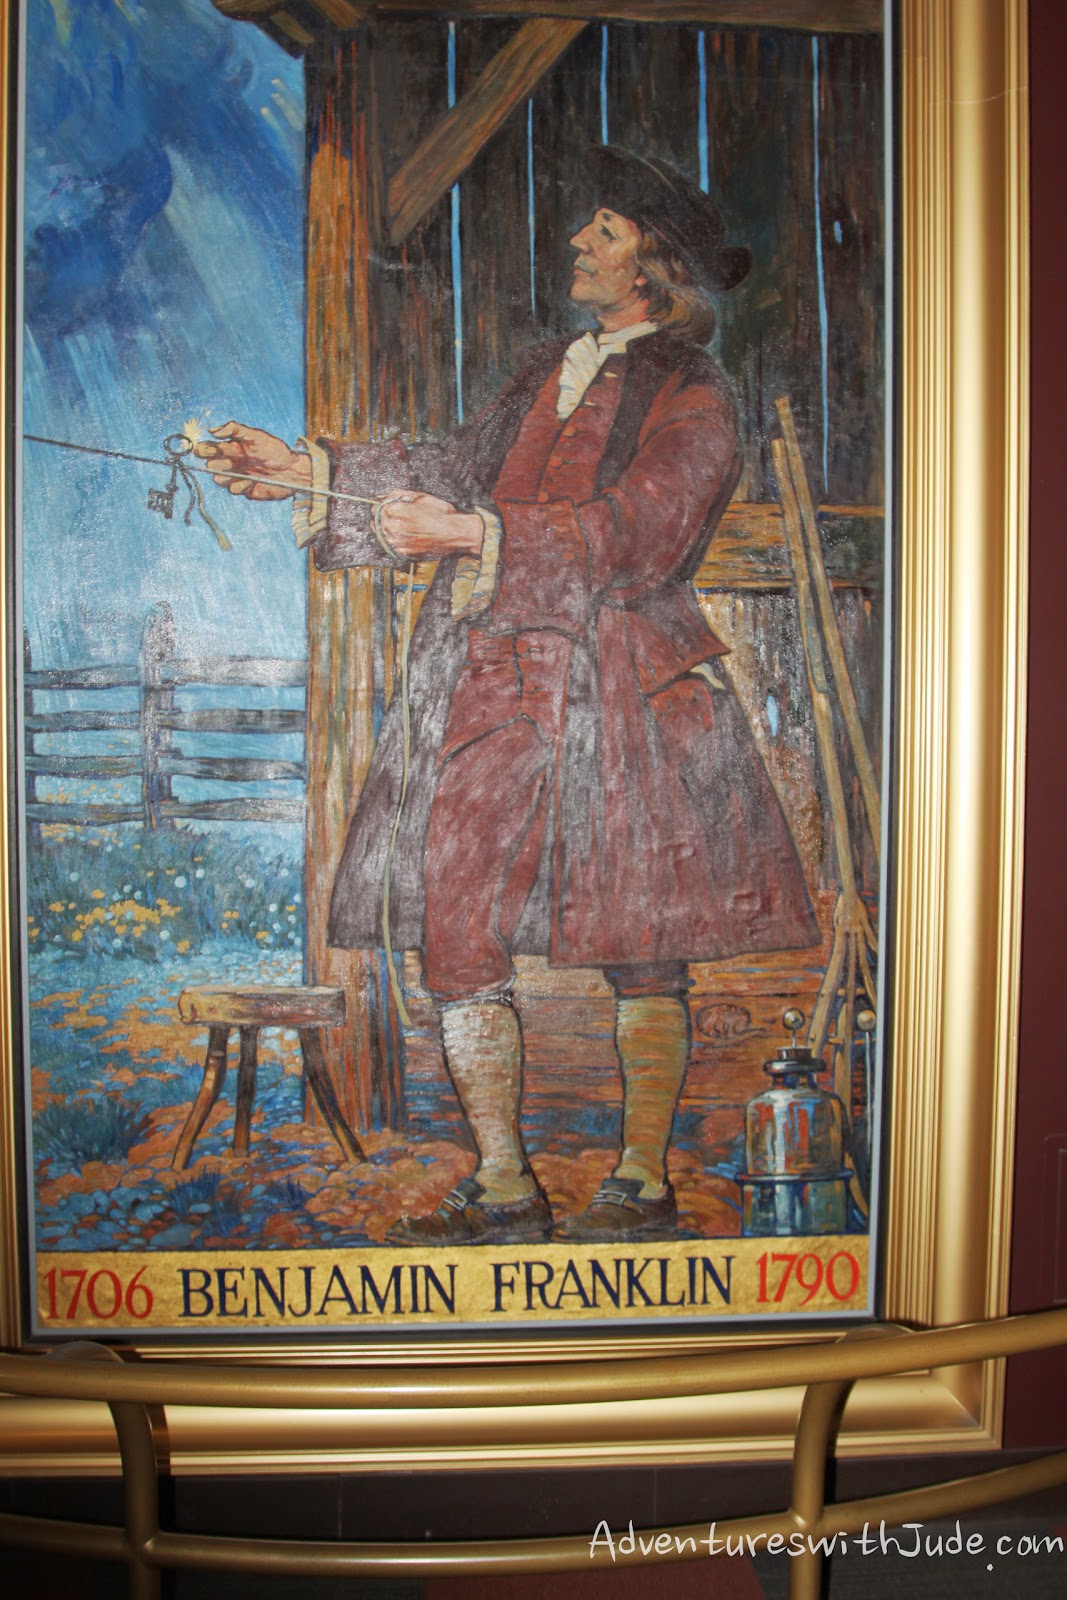 Ben Franklin flying his kite